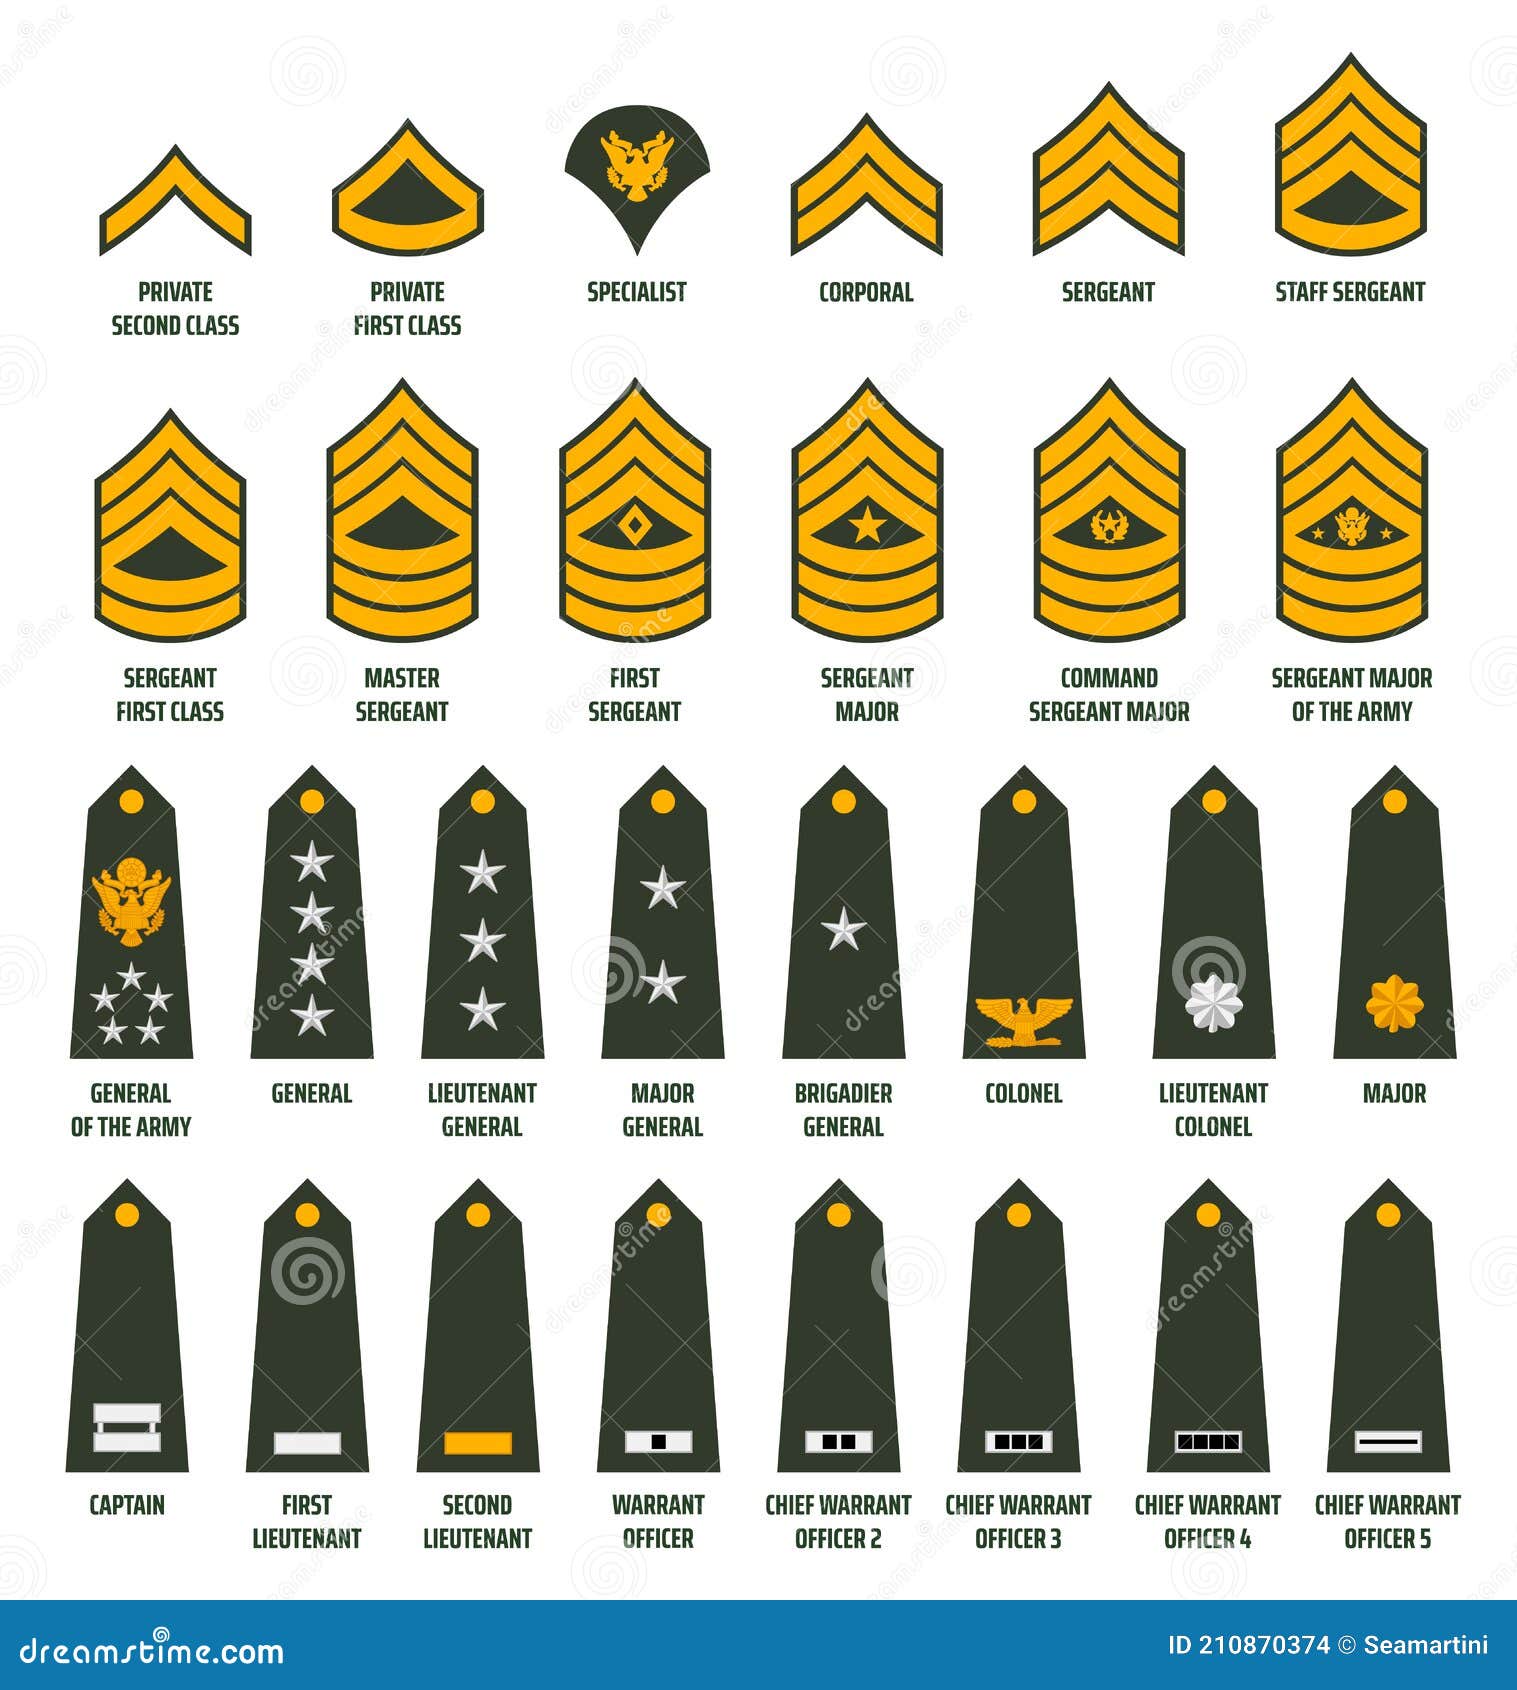 Navy Uniforms Navy Uniform Rank Insignia All In One Photos | Hot Sex ...